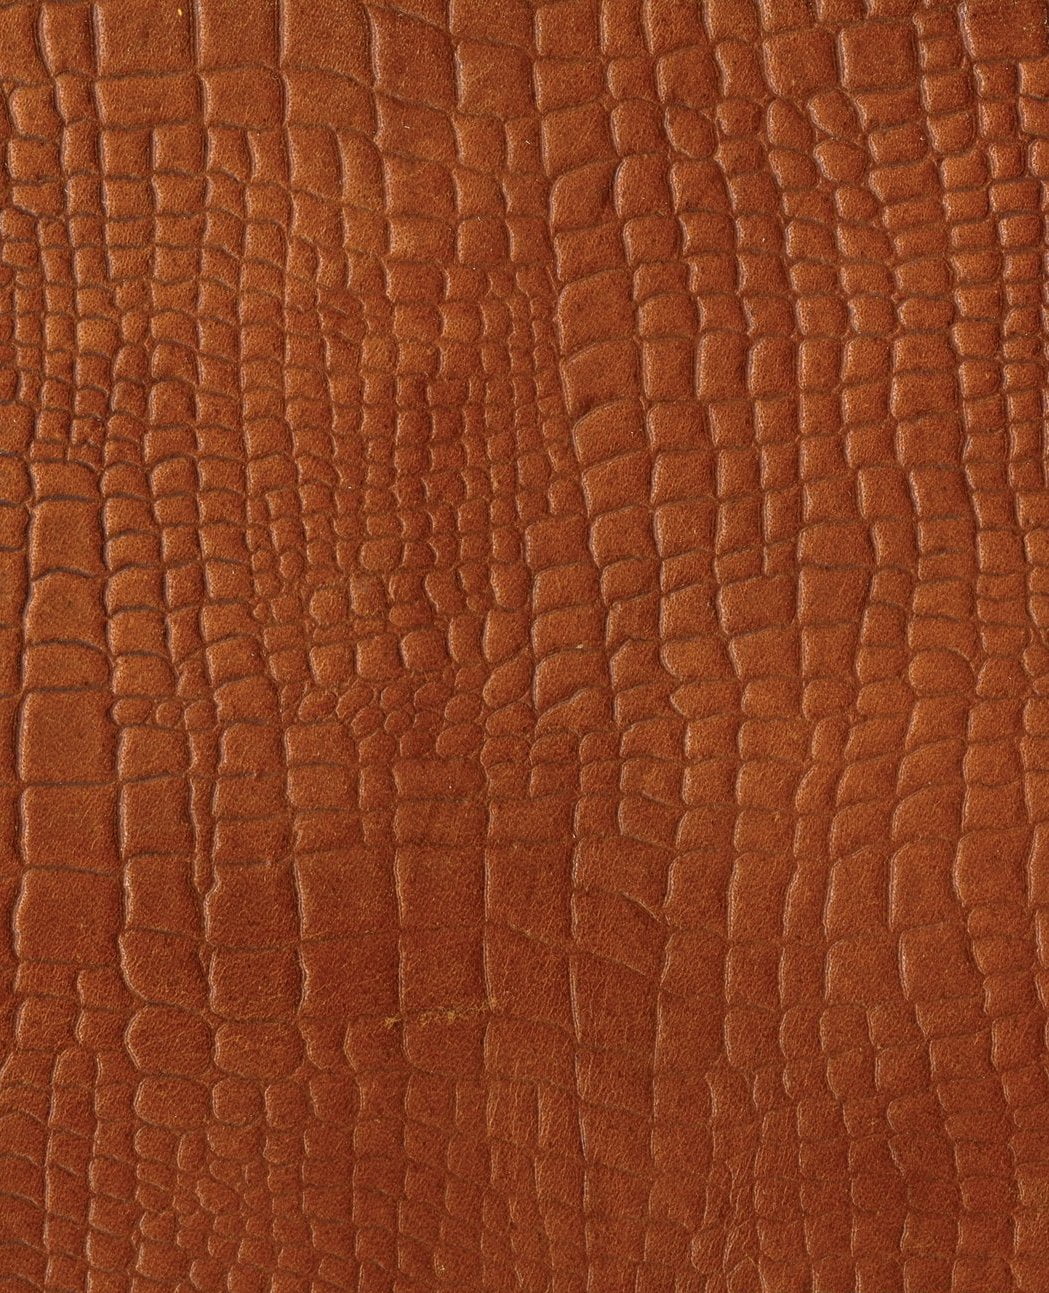  Doqn Buffalo Leather Sheet 2.0-2.2mm(5-5.5oz) Thick